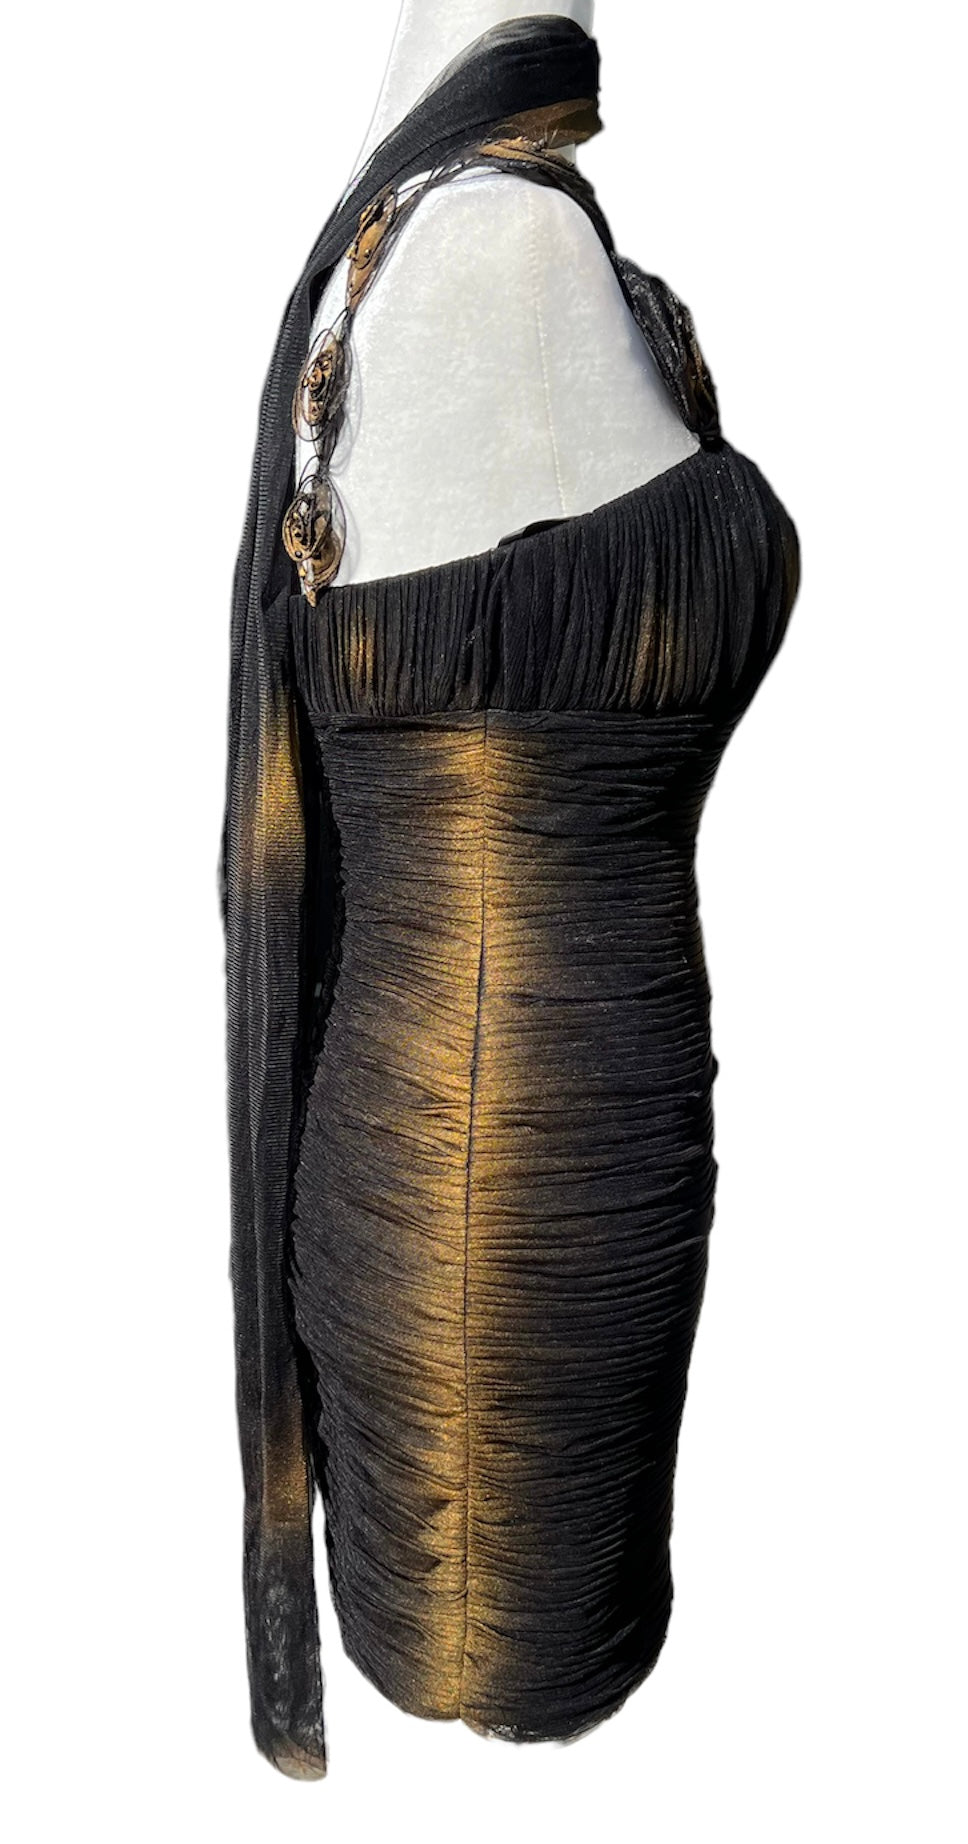 La Bottega Shirred Black Dress with Gold Accents, 4